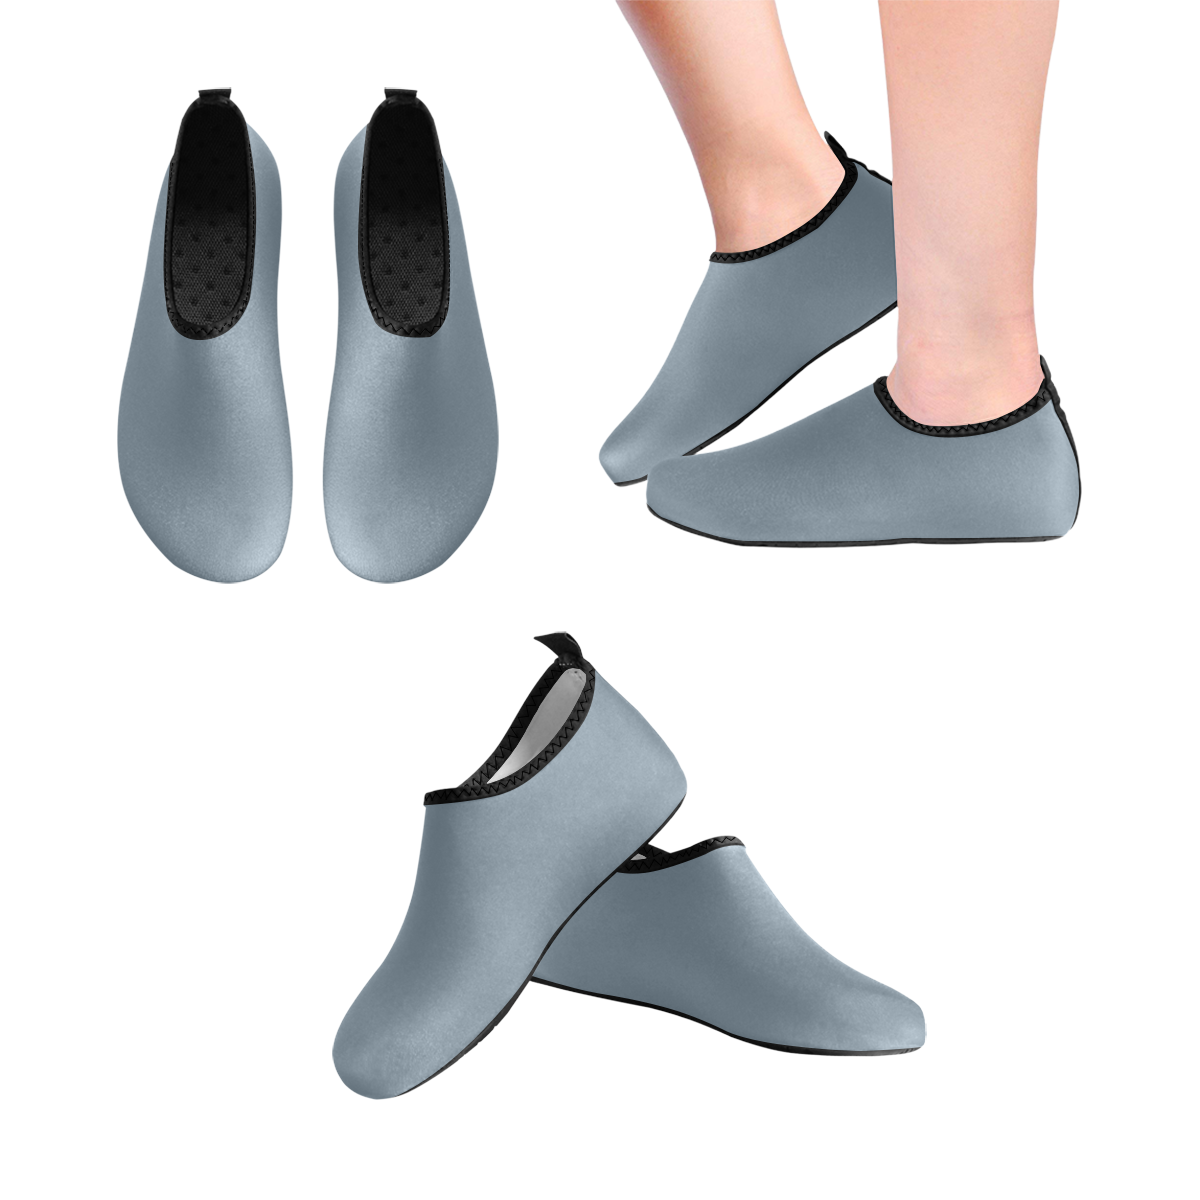 color light slate grey Men's Slip-On Water Shoes (Model 056)